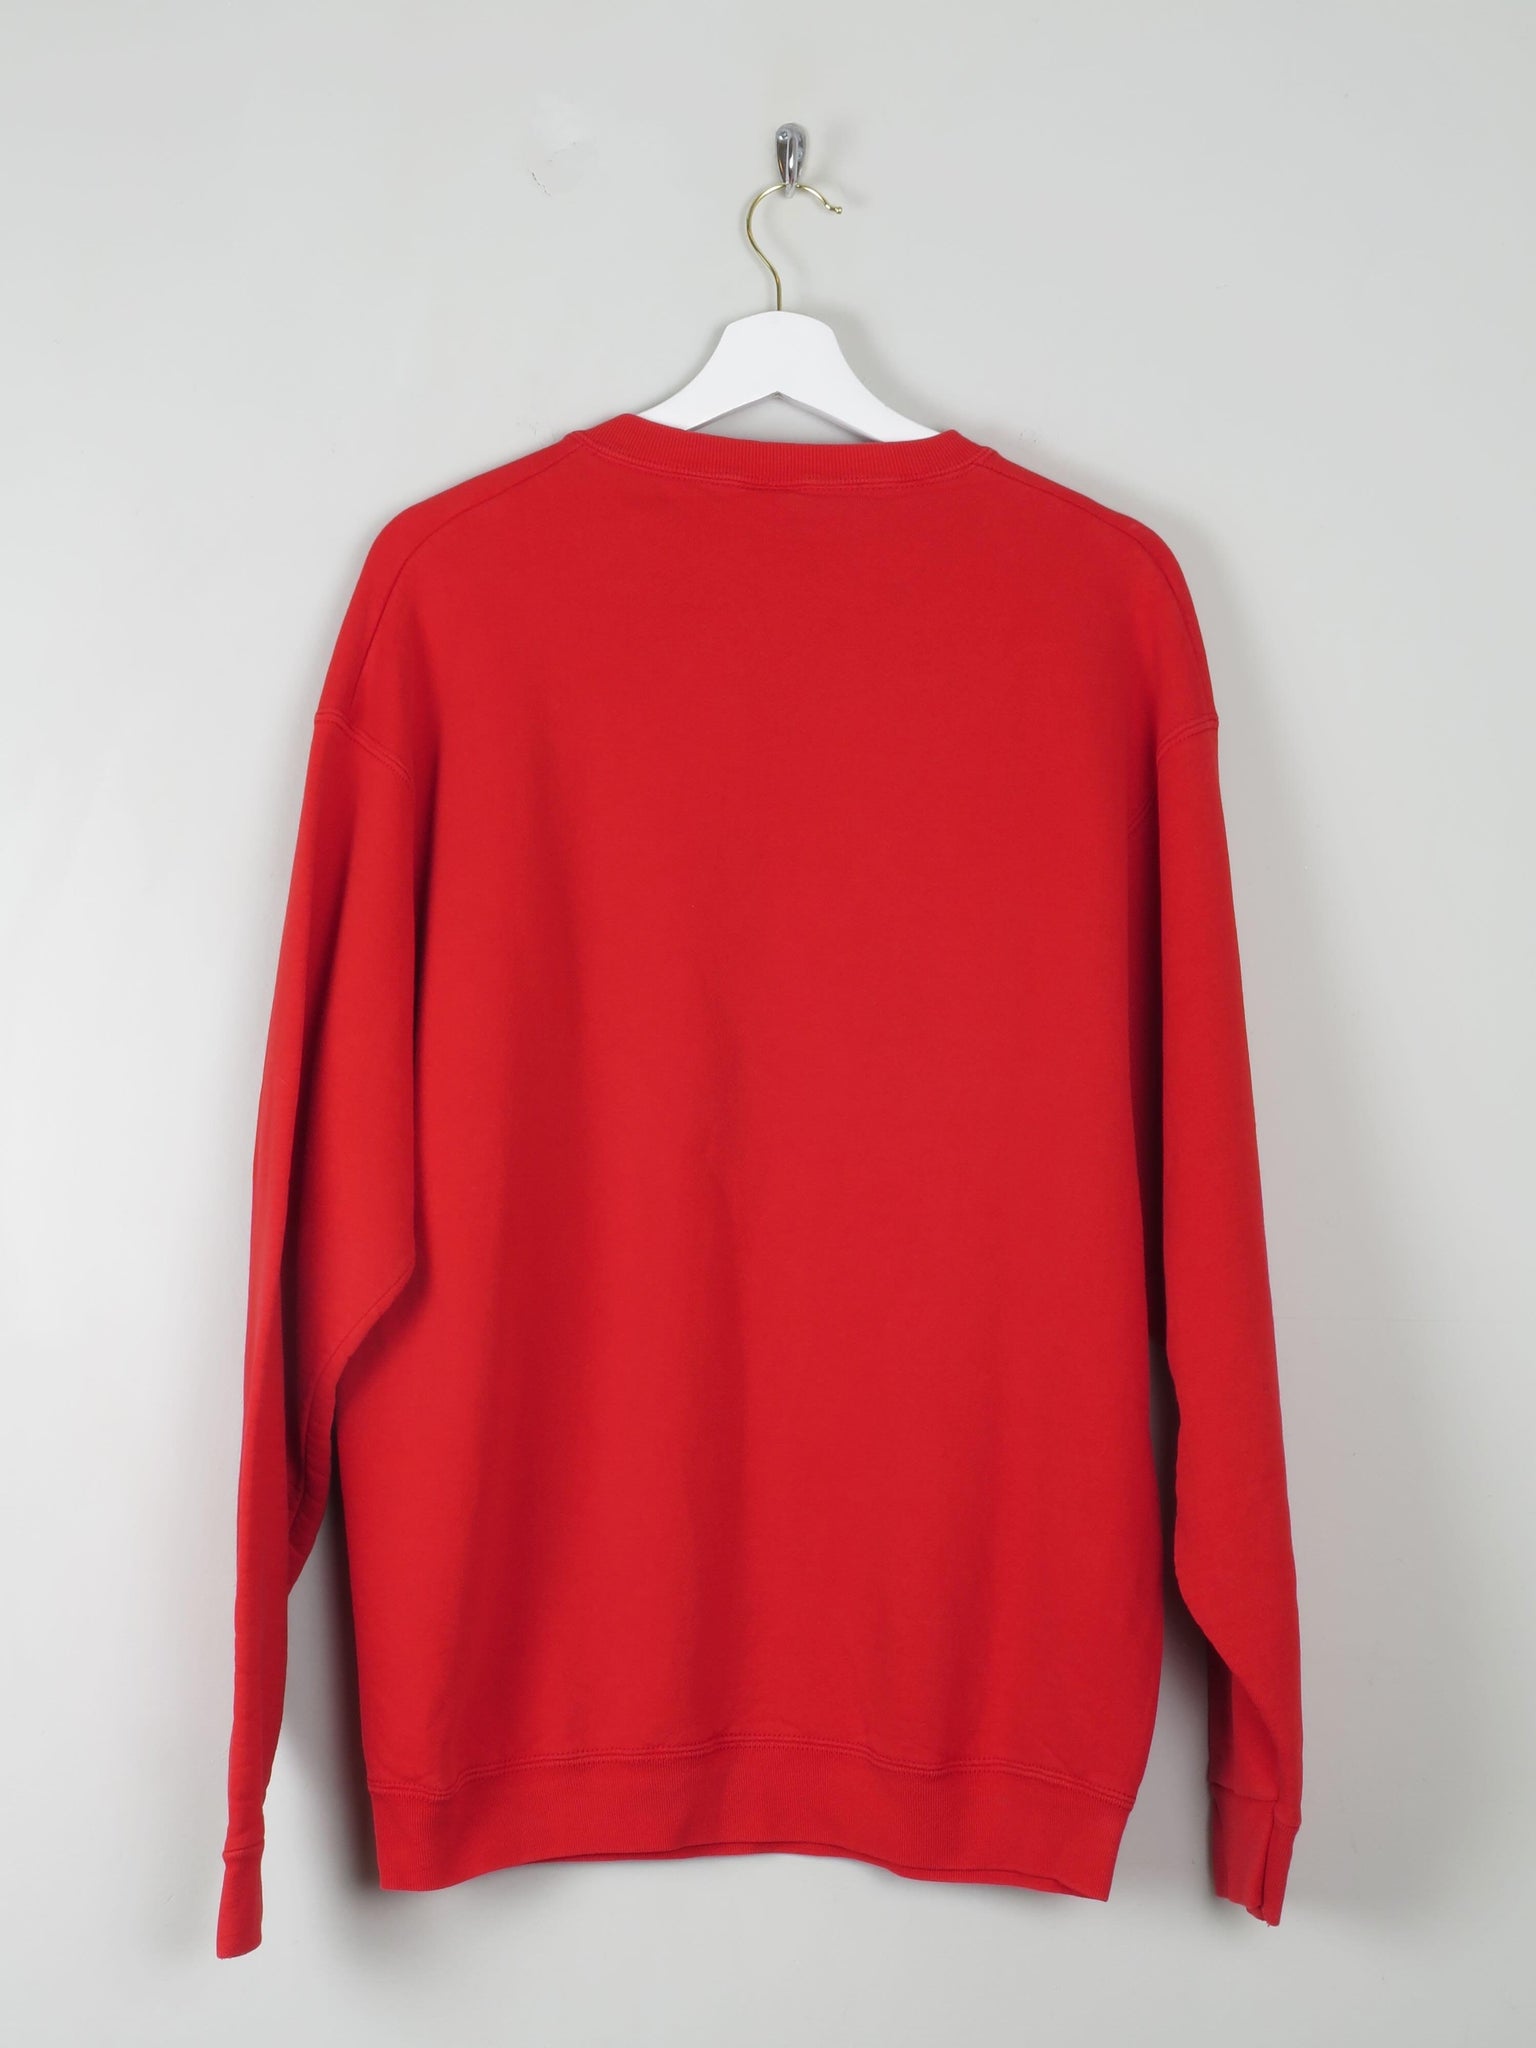 Men's Vintage Red Embroidered Sweatshirt L - The Harlequin